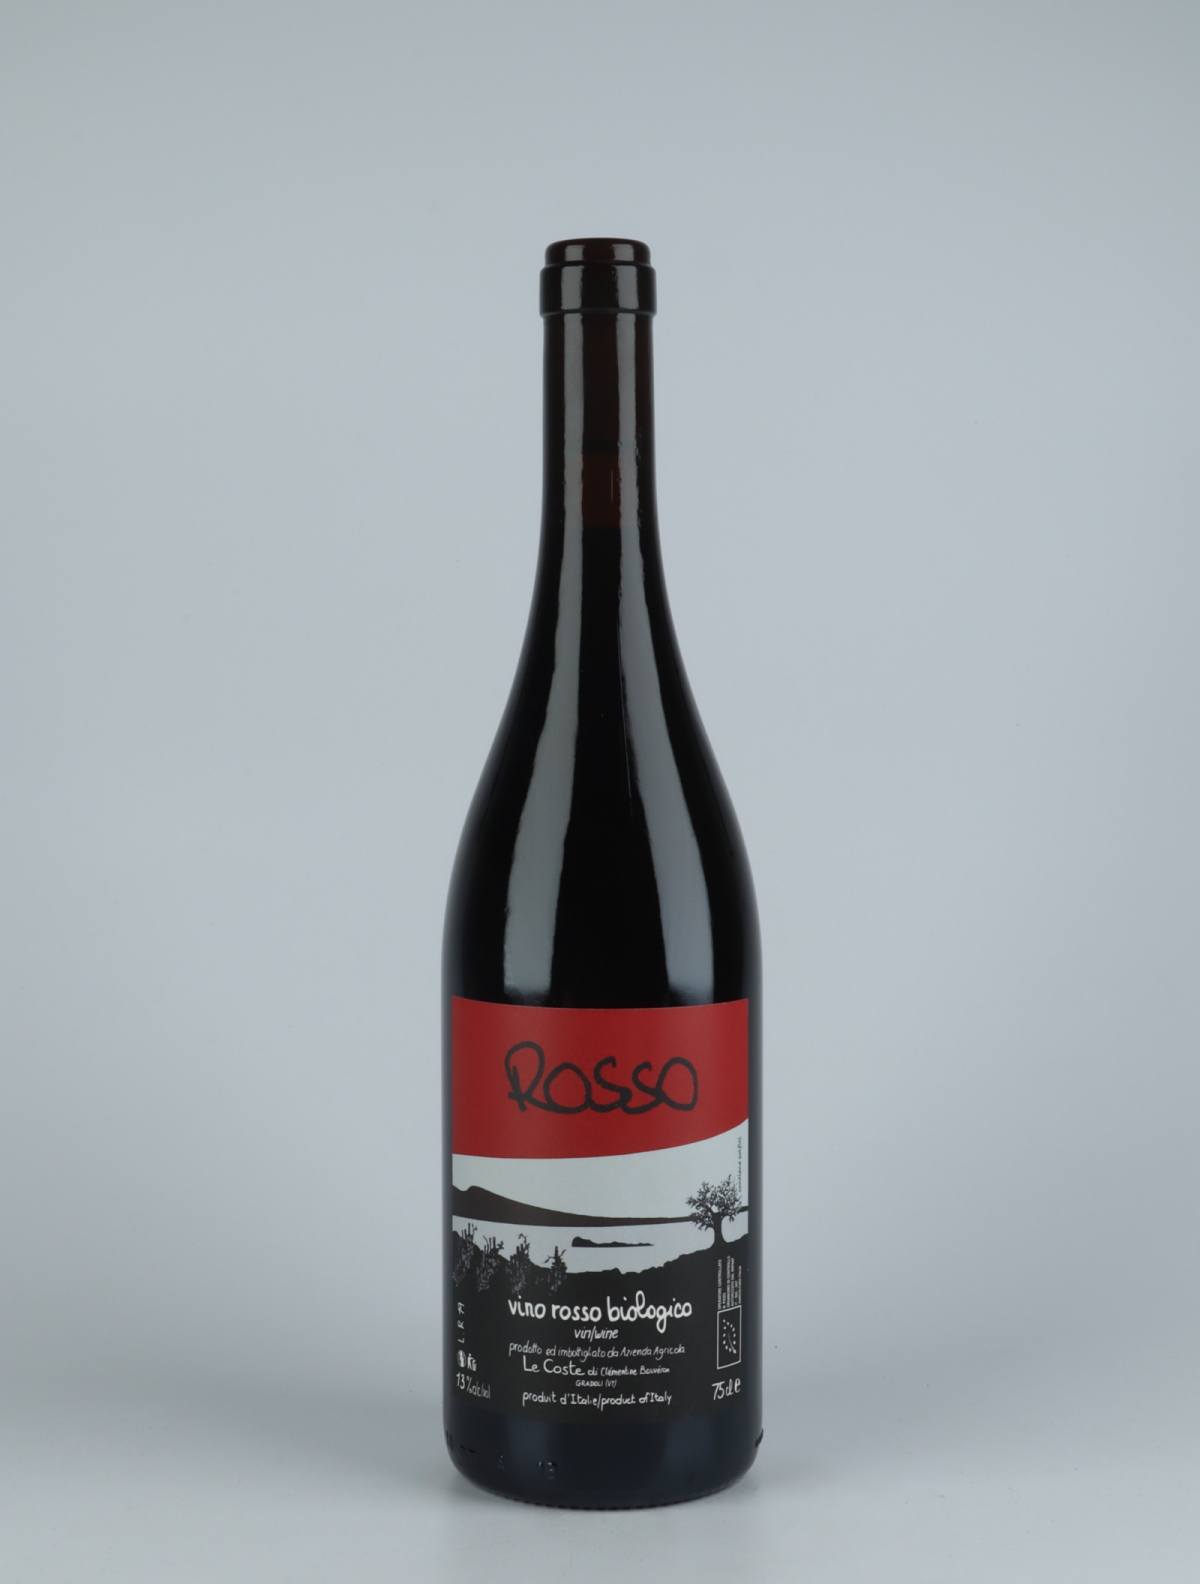 En flaske 2019 Rosso Rødvin fra Le Coste, Lazio i Italien